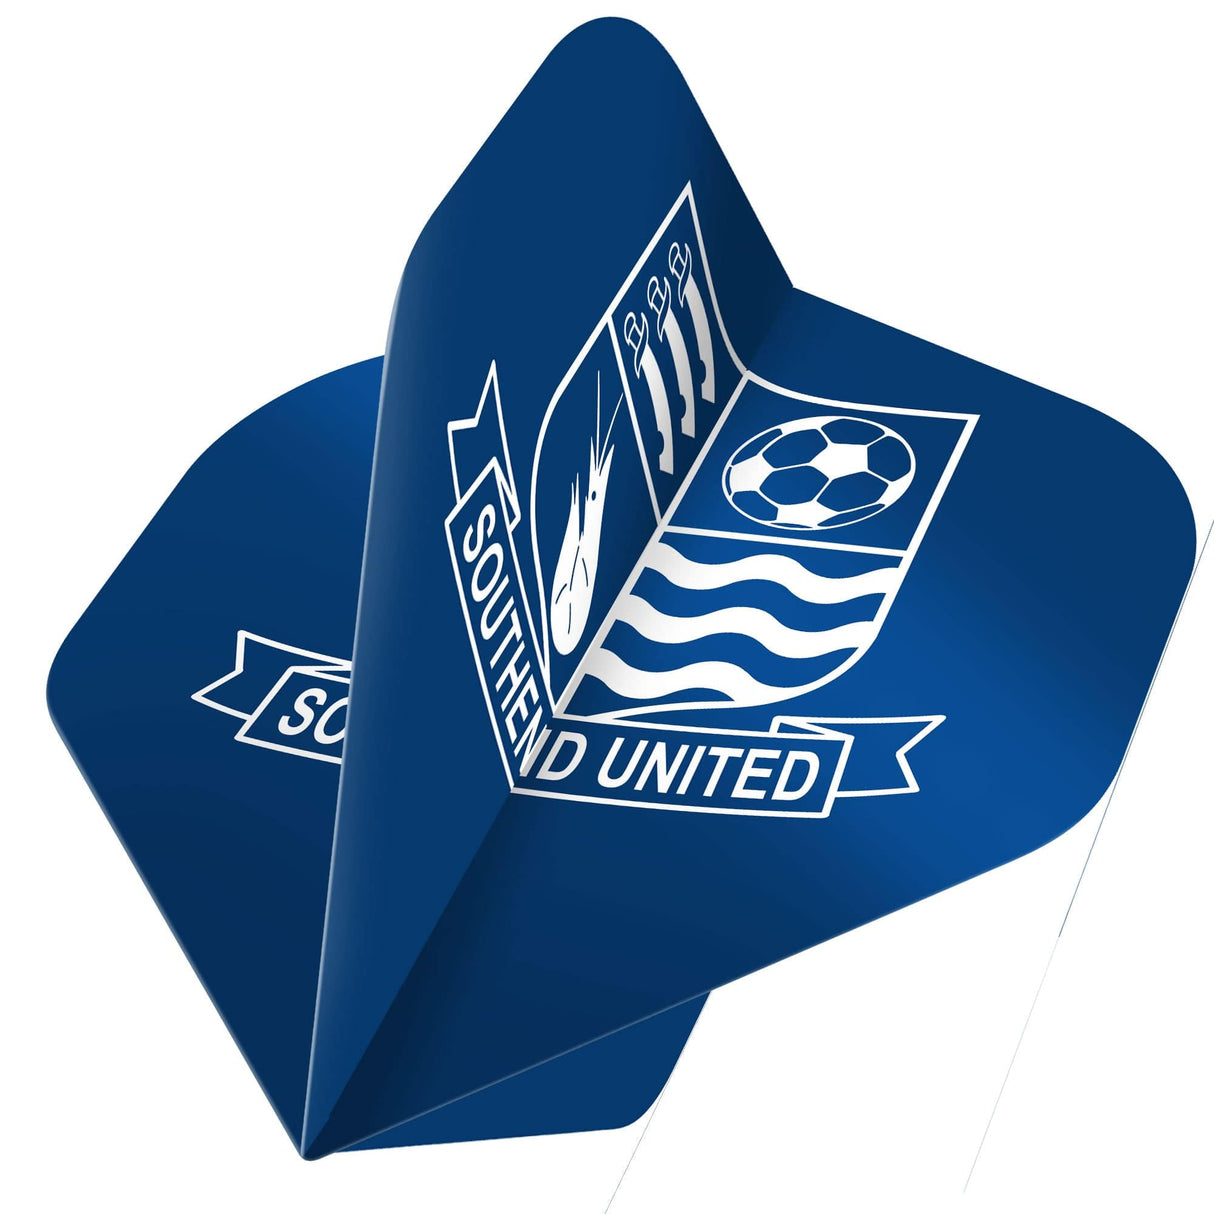 Southend United FC - Official Licensed - Dart Flights - No2 - Std - F1 - Blue